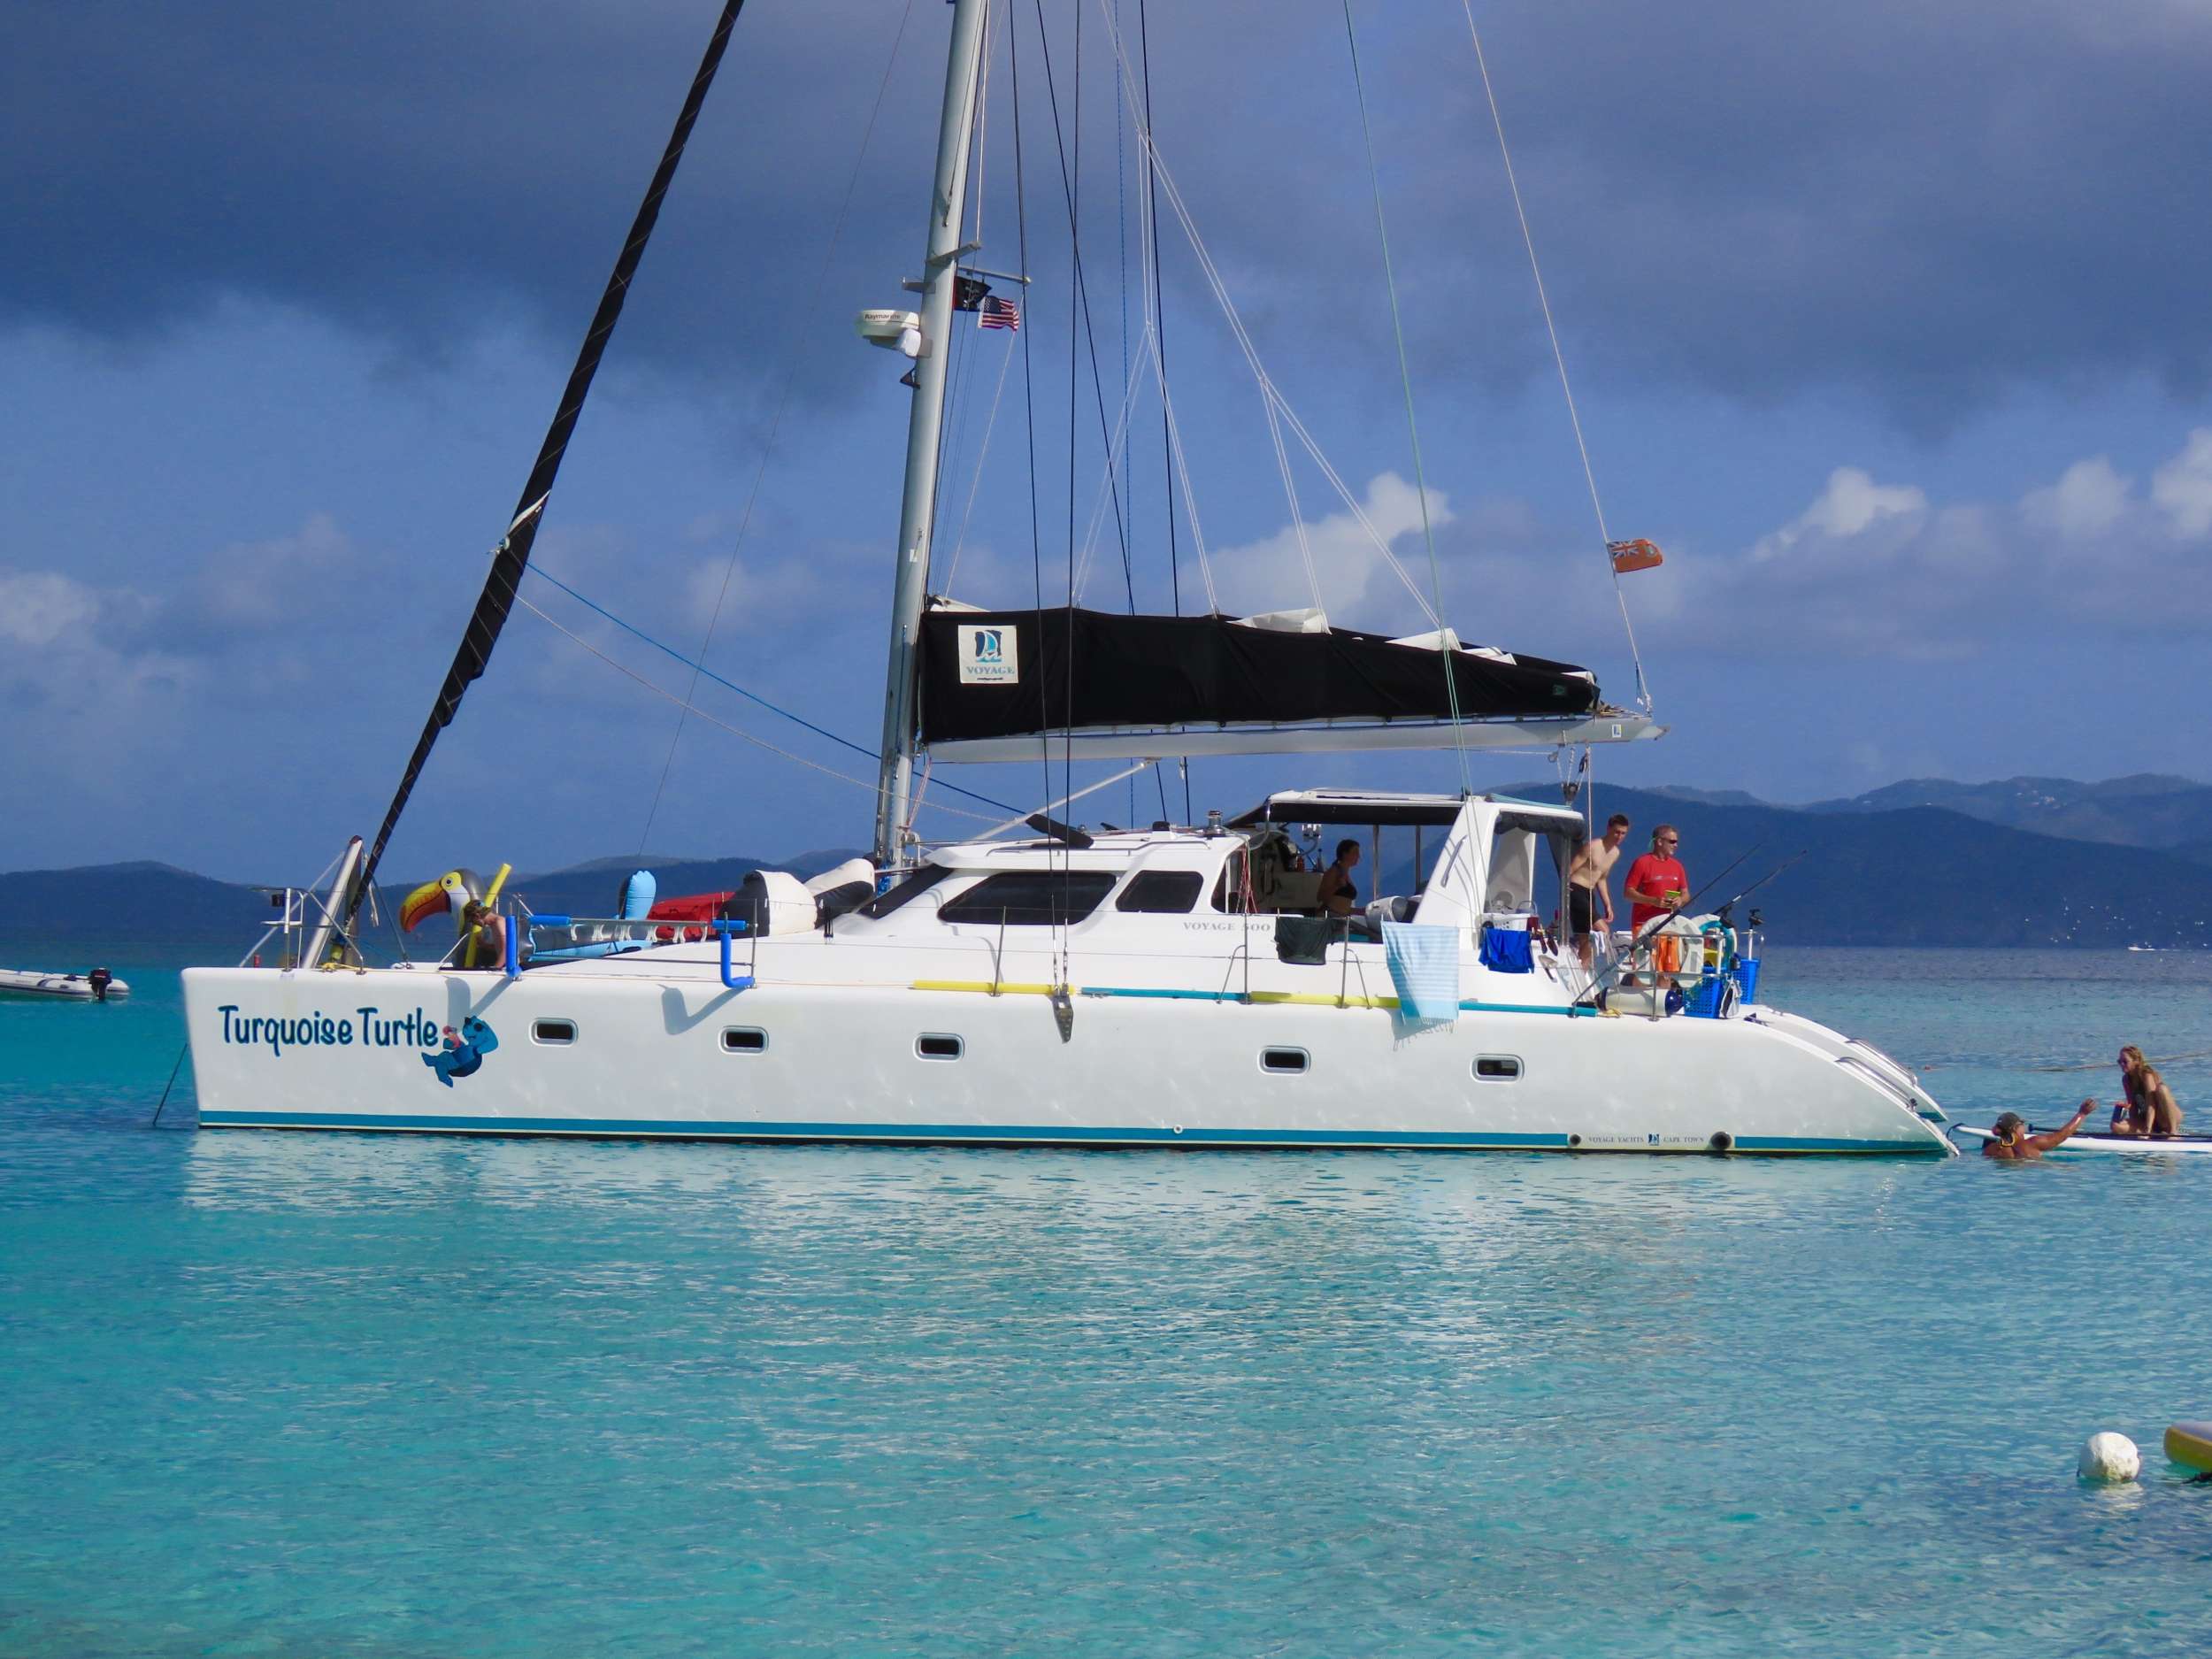 Turquoise Turtle Crewed Catamaran at Anchor